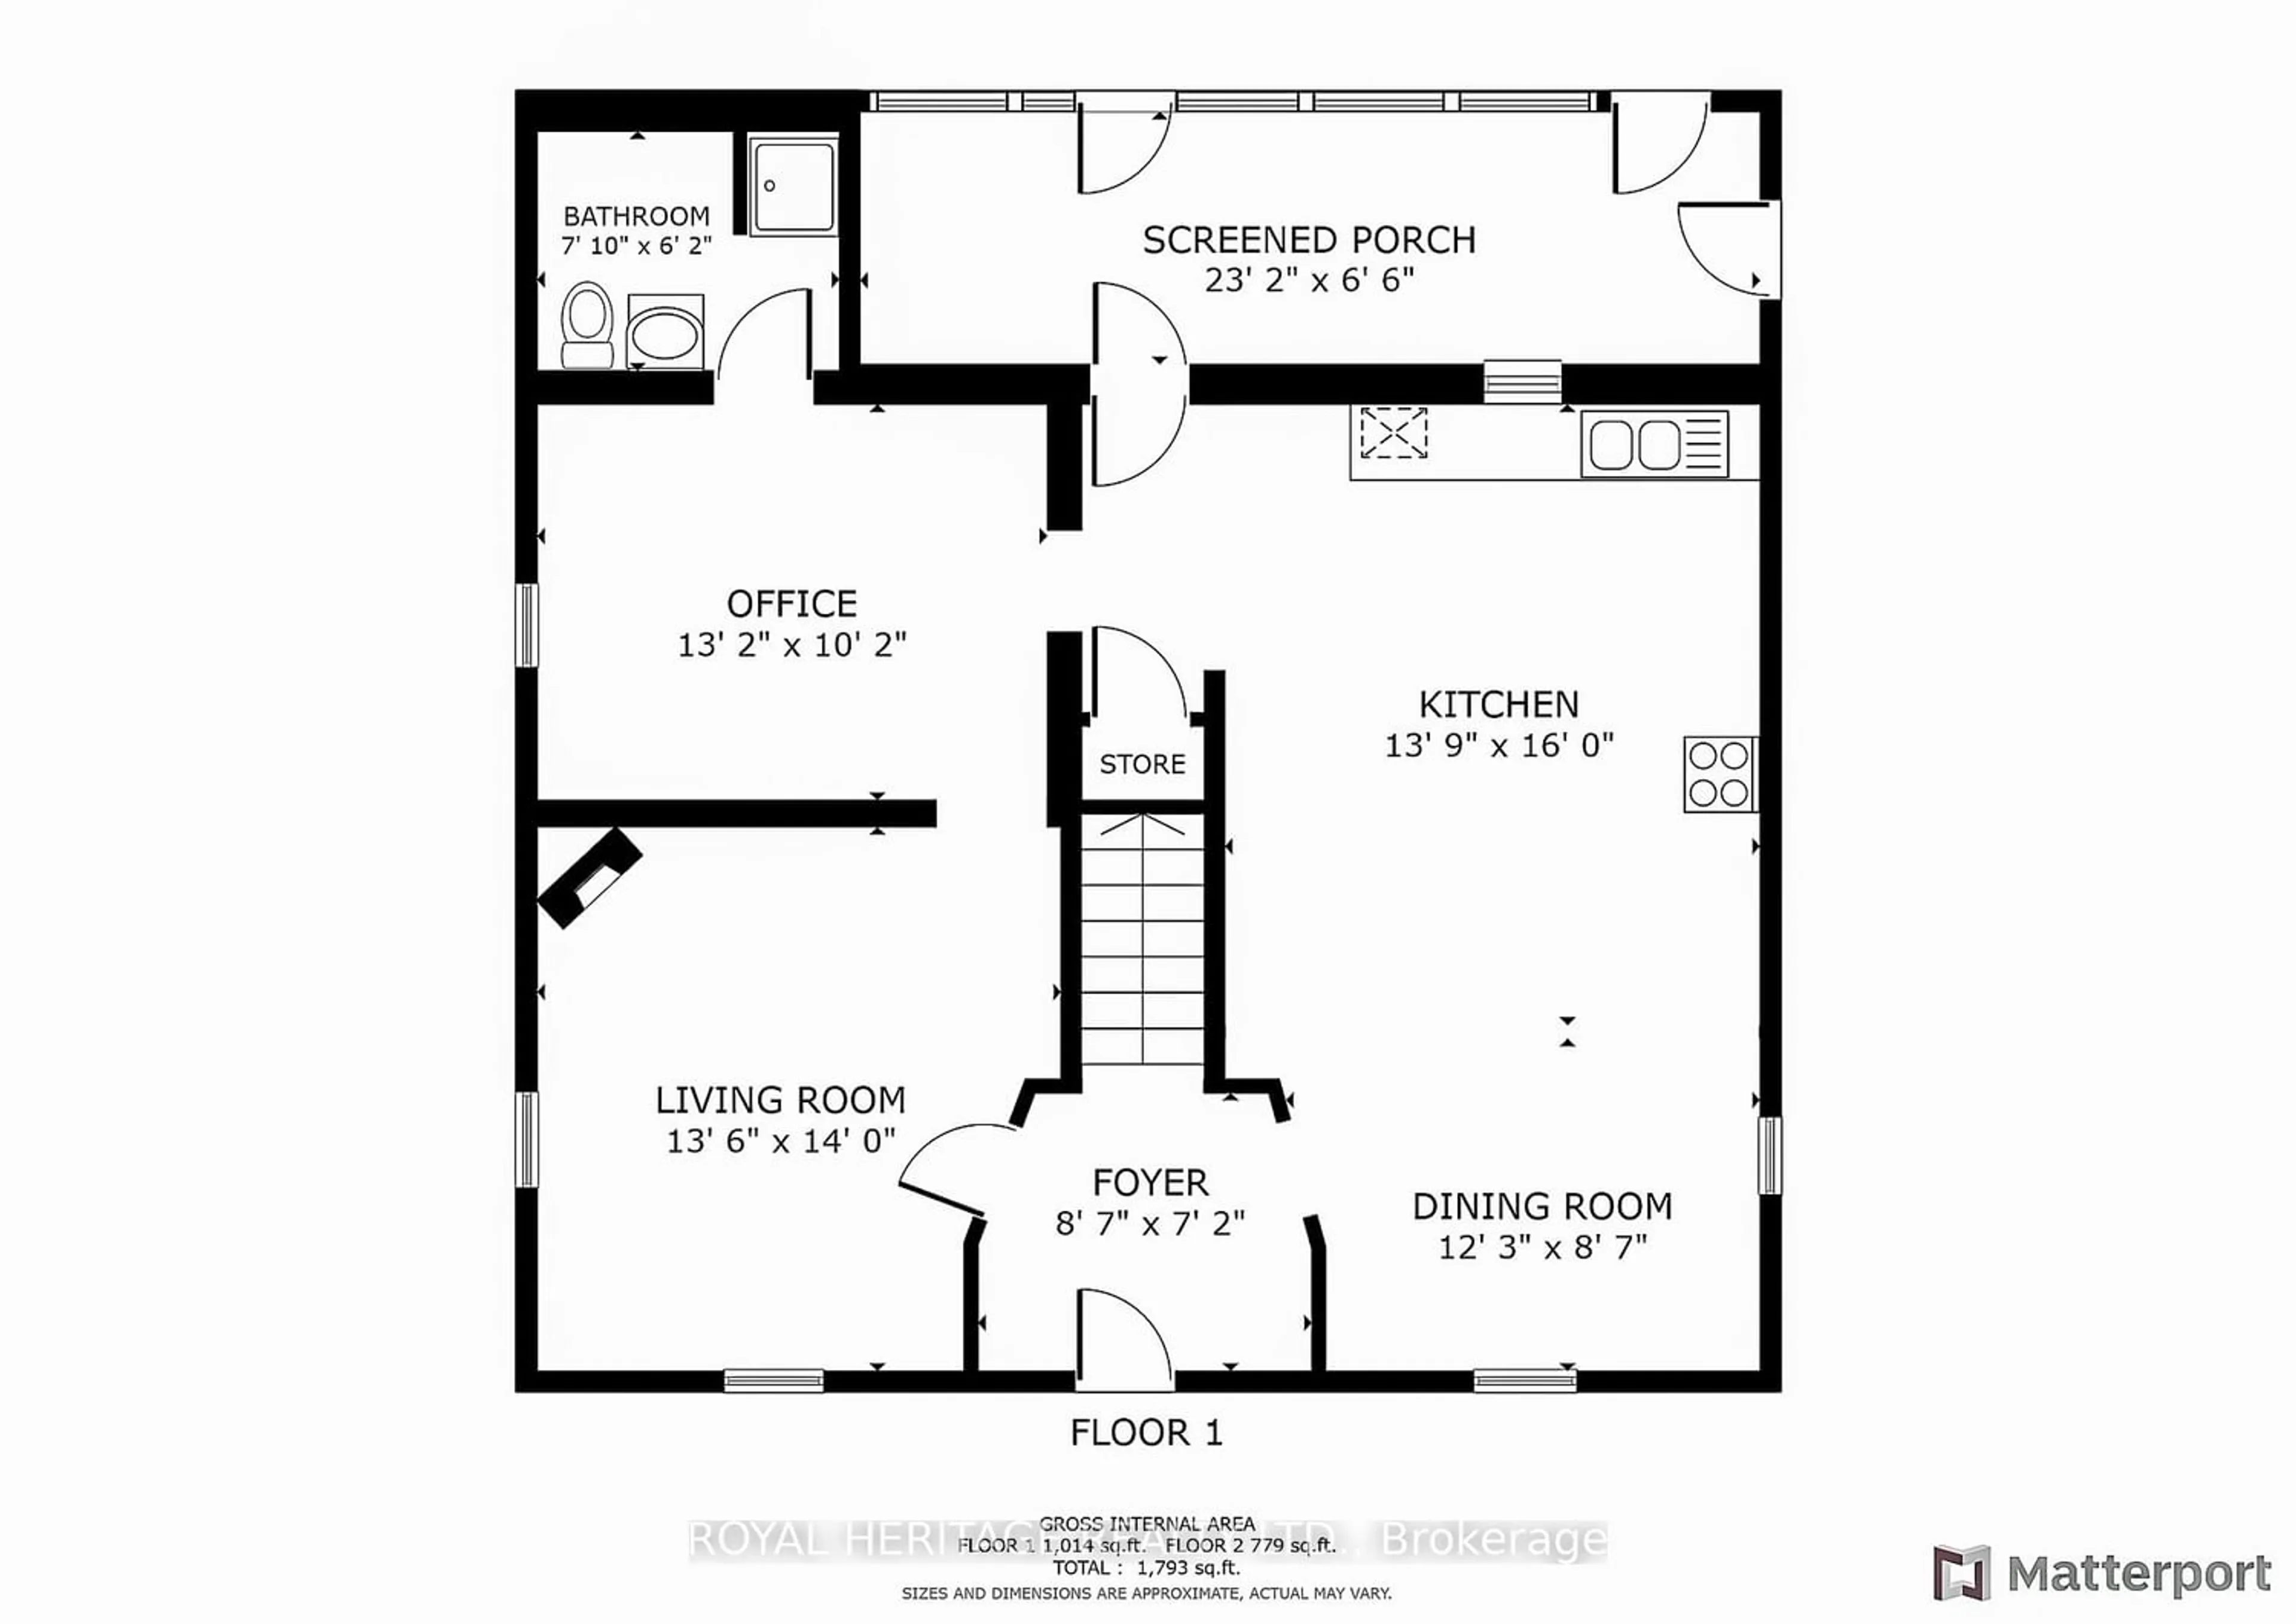 Floor plan for 171 Mhusk Rd, Admaston/Bromley Ontario K0J 1S0